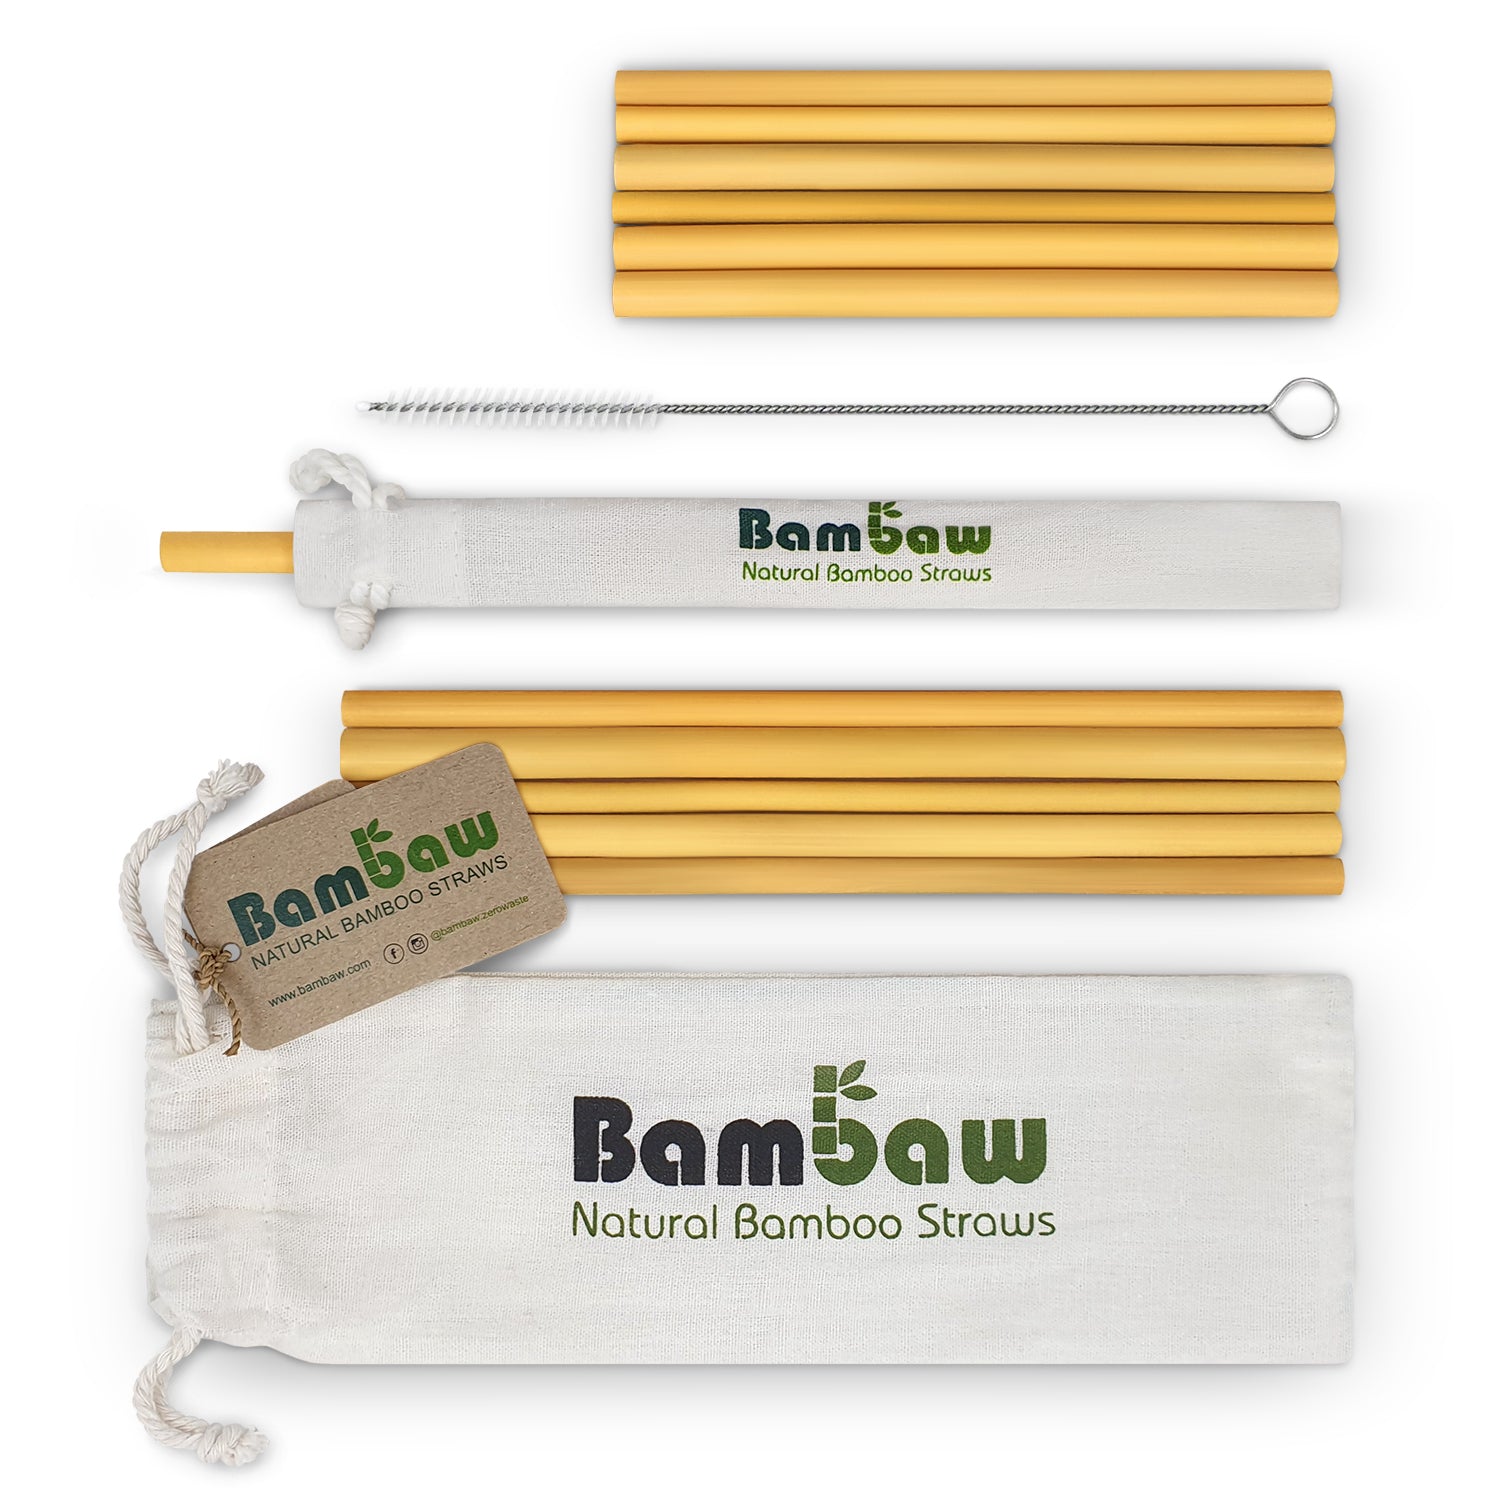 Bambaw Bamboo 12 Mixed Size Straws